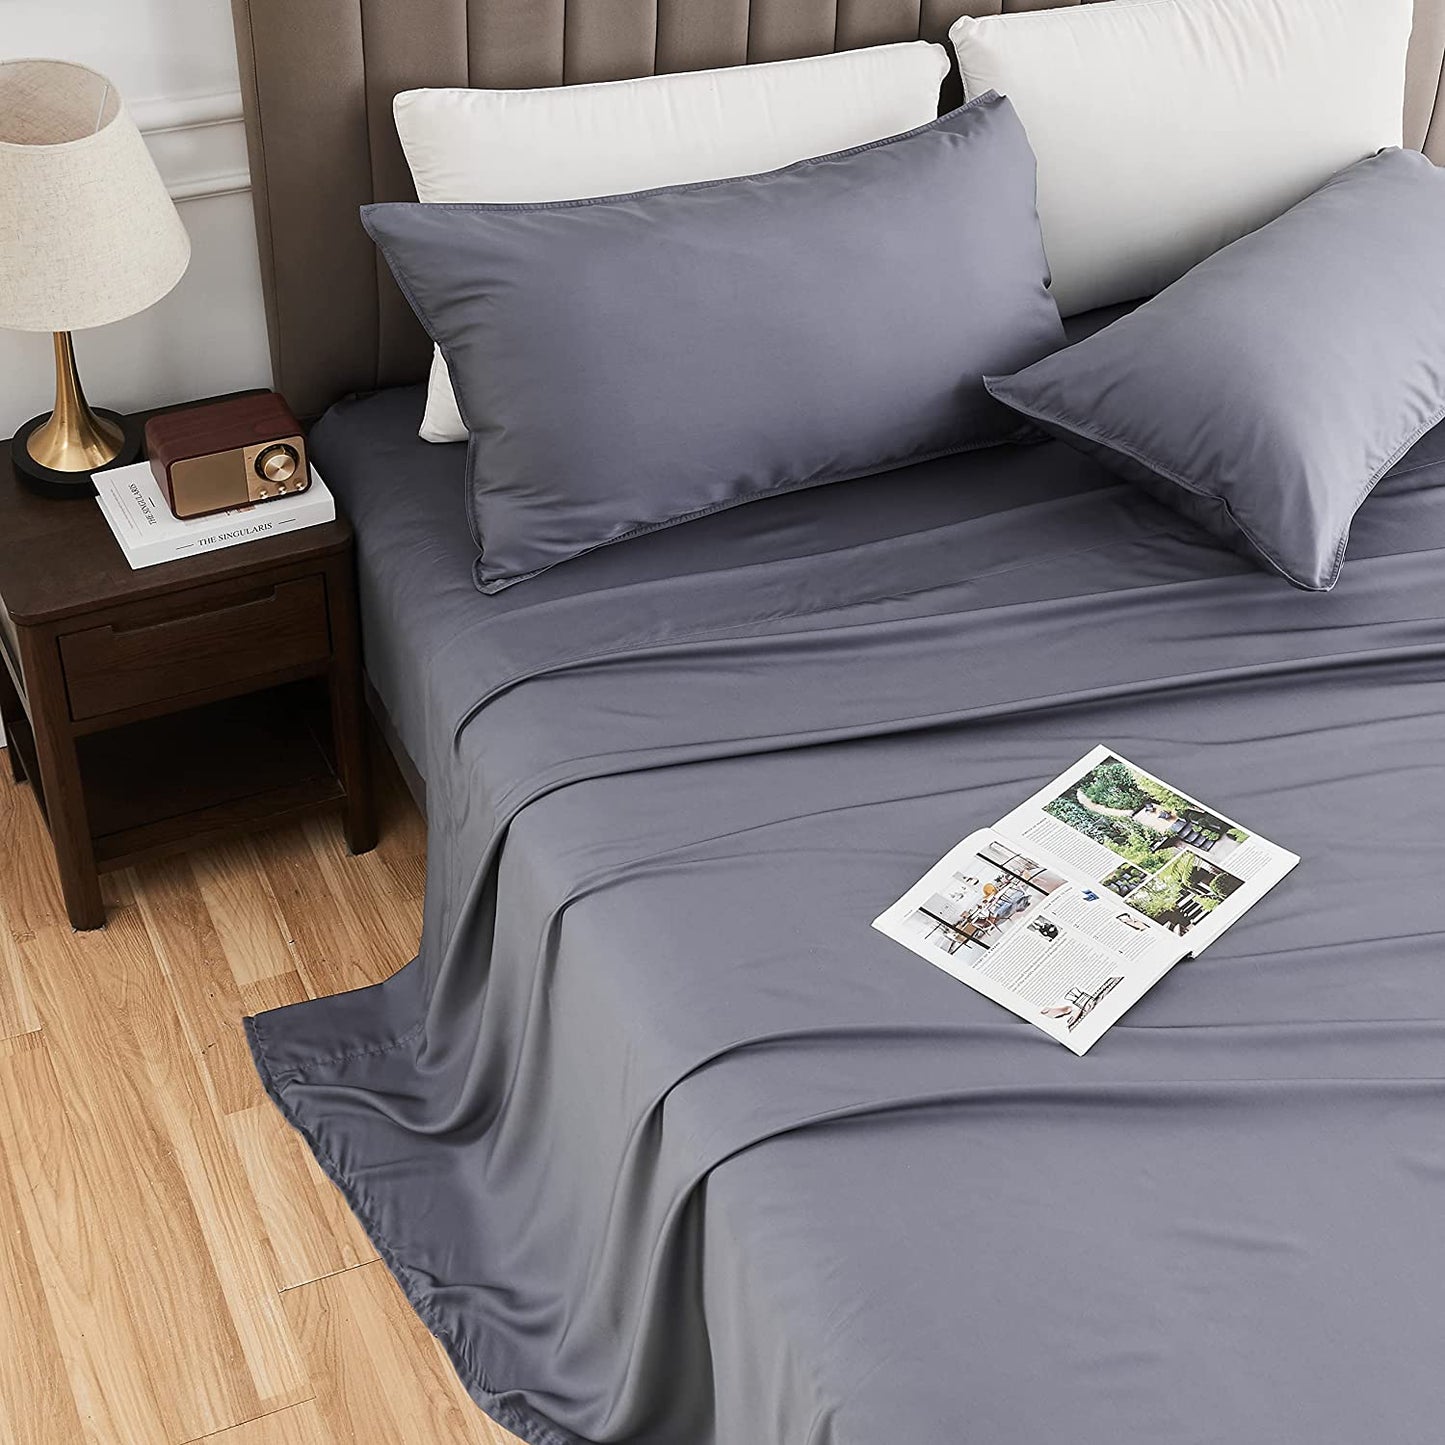 WOD FAMY King Size 100% Bamboo Sheet Set 16" Deep Pocket Cooling Breathable Bamboo Bed Sheets Soft Hotel Bedding Sheet Sets Light Blue